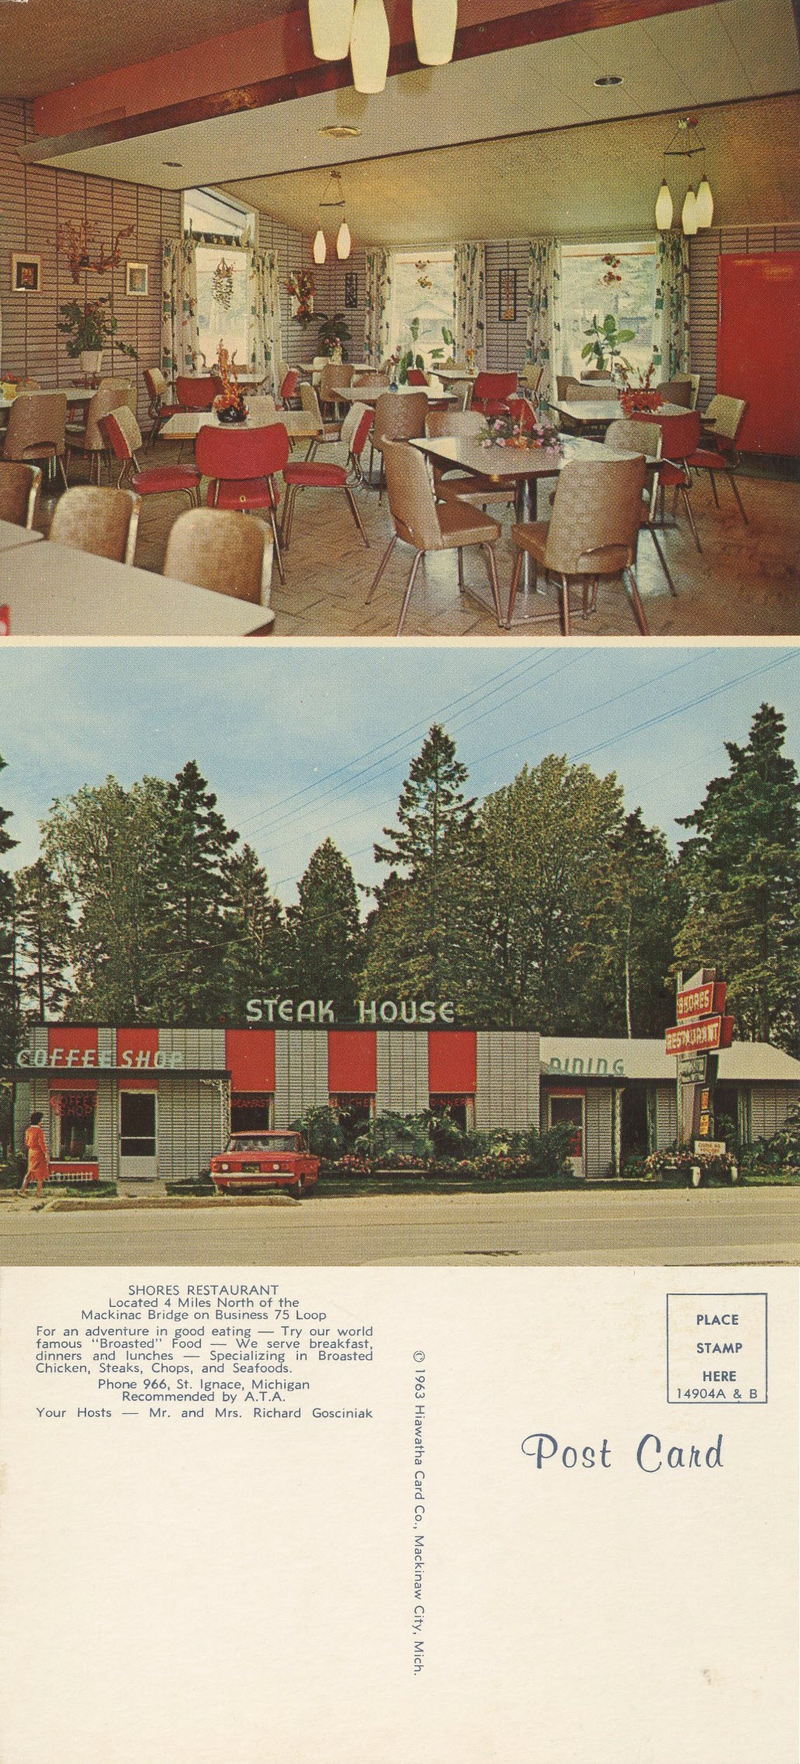 Shores Restaurant and Kabaret Lounge (The Embers) - Vintage Postcard